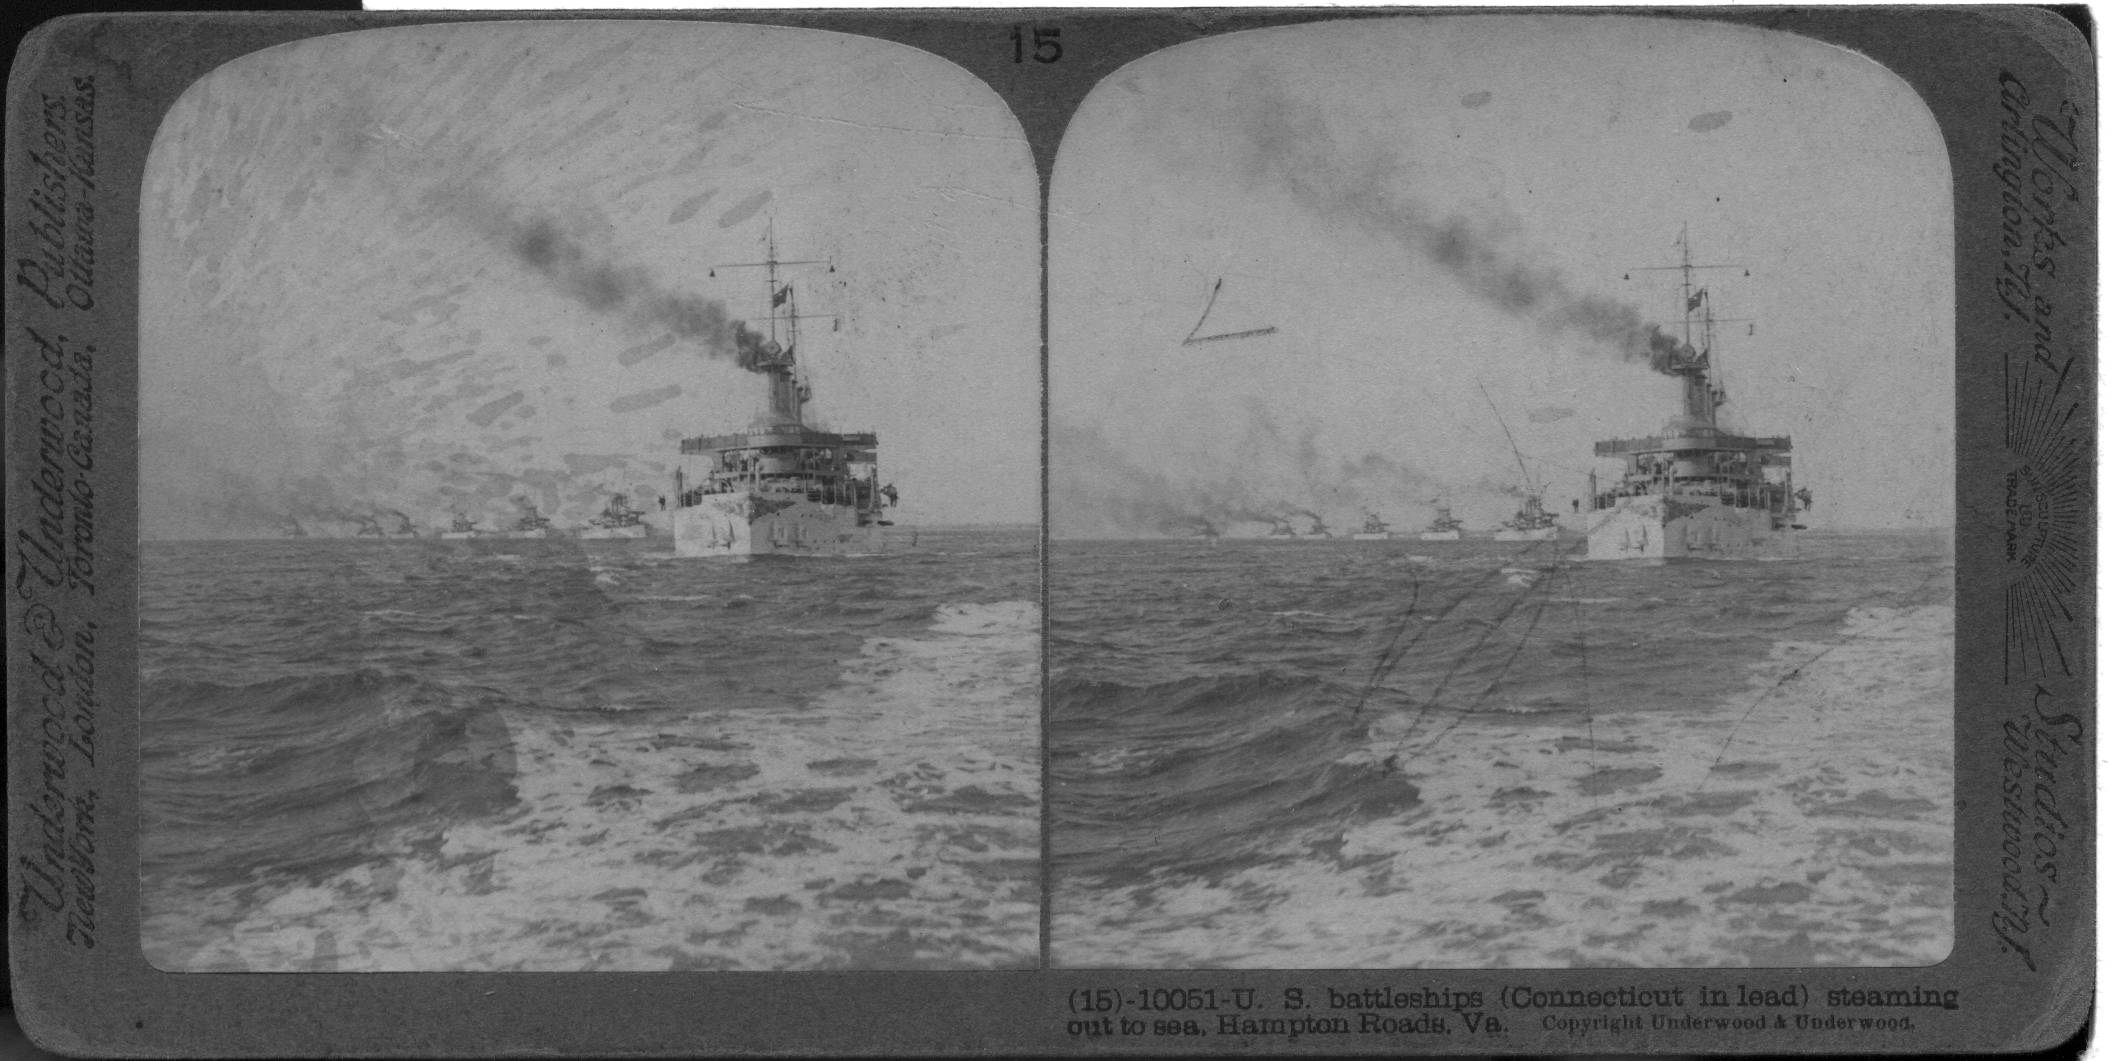 U.S. Battleships (Connecticut in lead) steaming out to sea, Hampton Roads, Va.